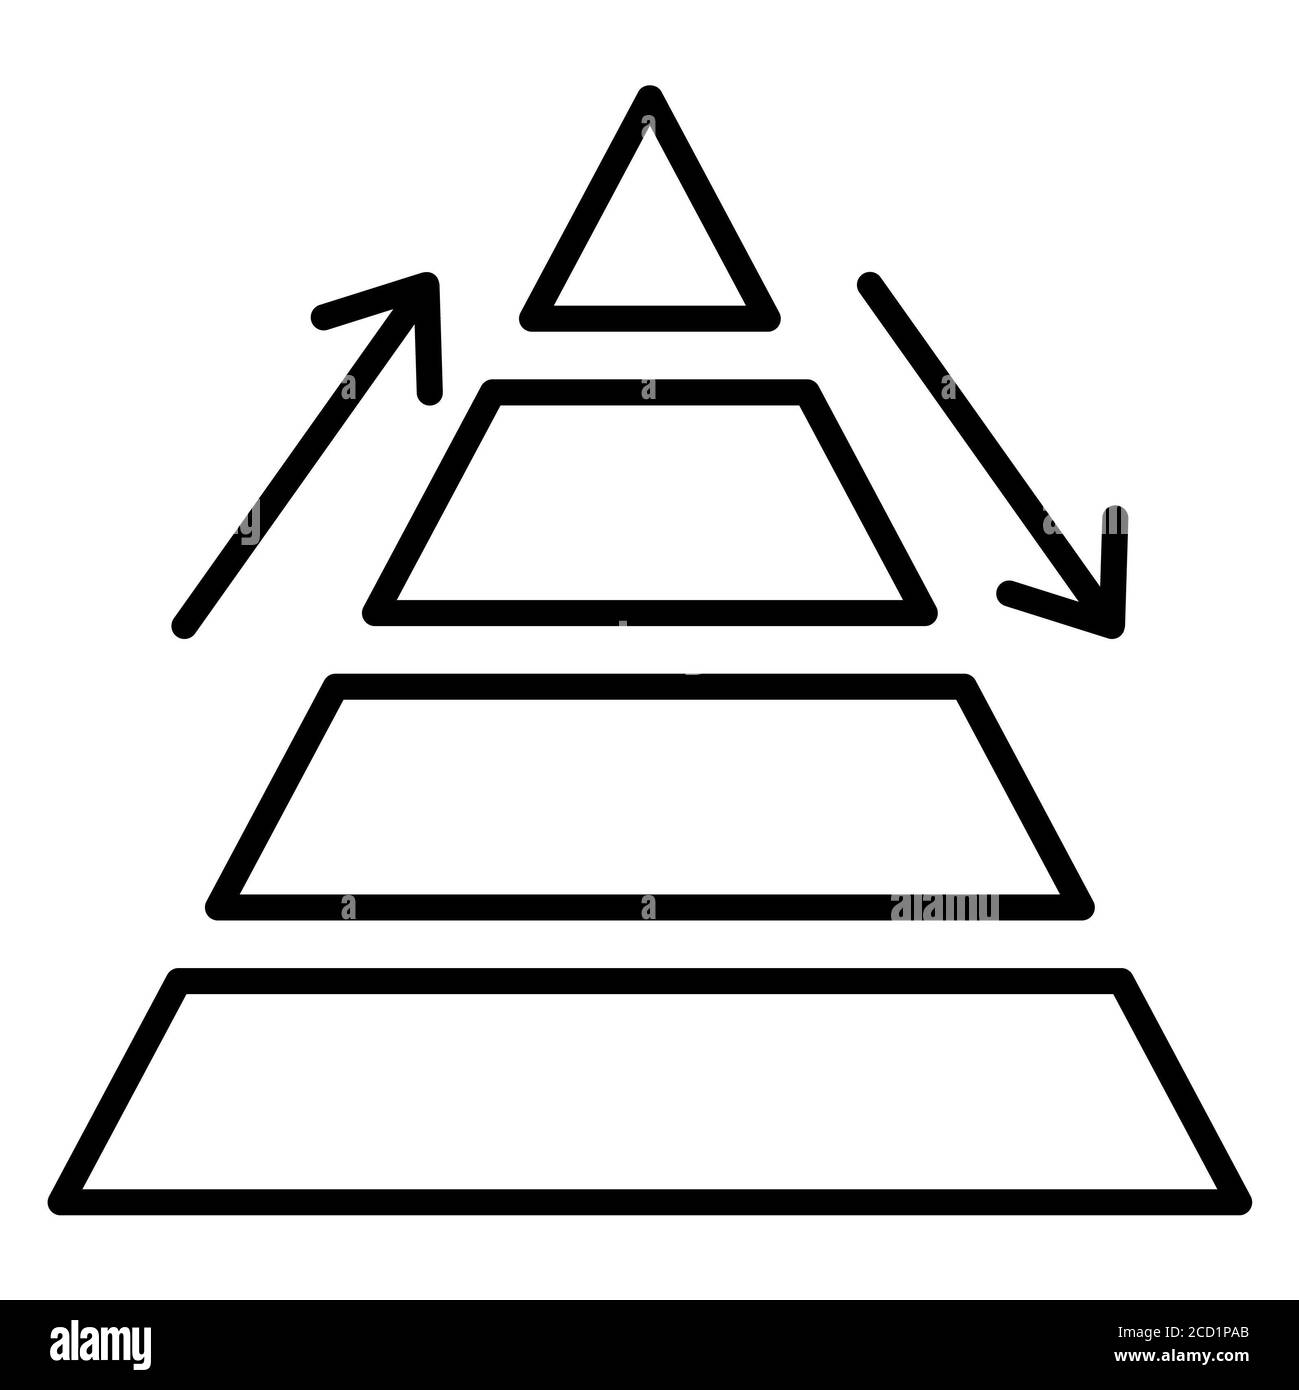 Pyramid Data Analytics Line Icon Stock Photo